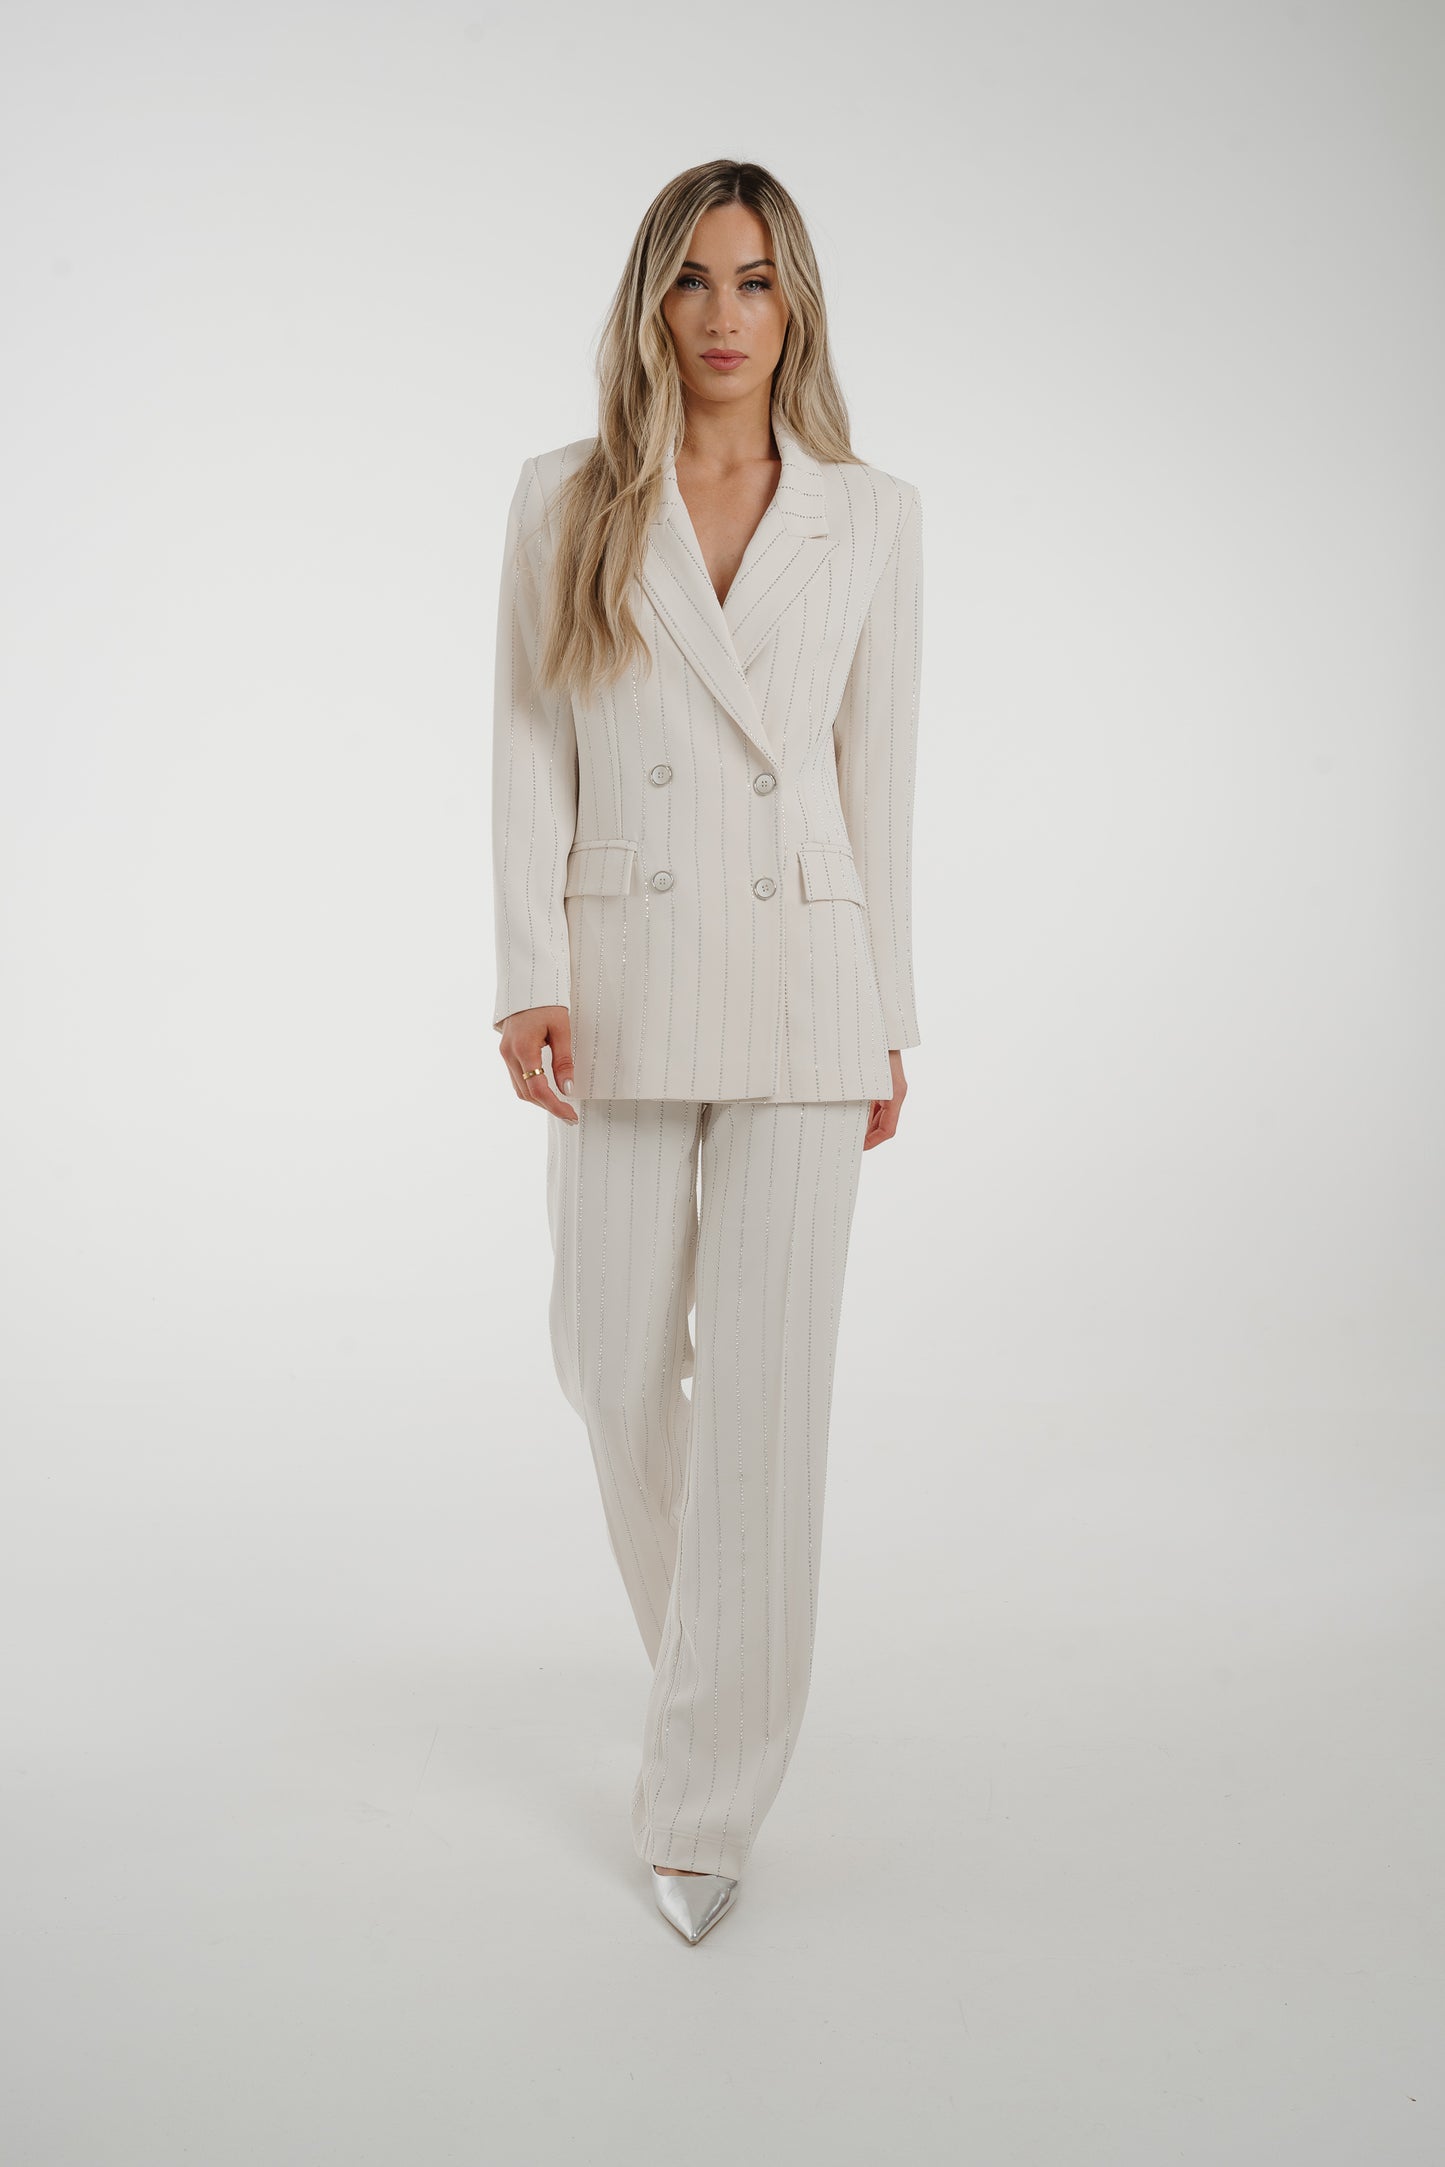 Alana Sparkle Pinstripe Suit In Cream